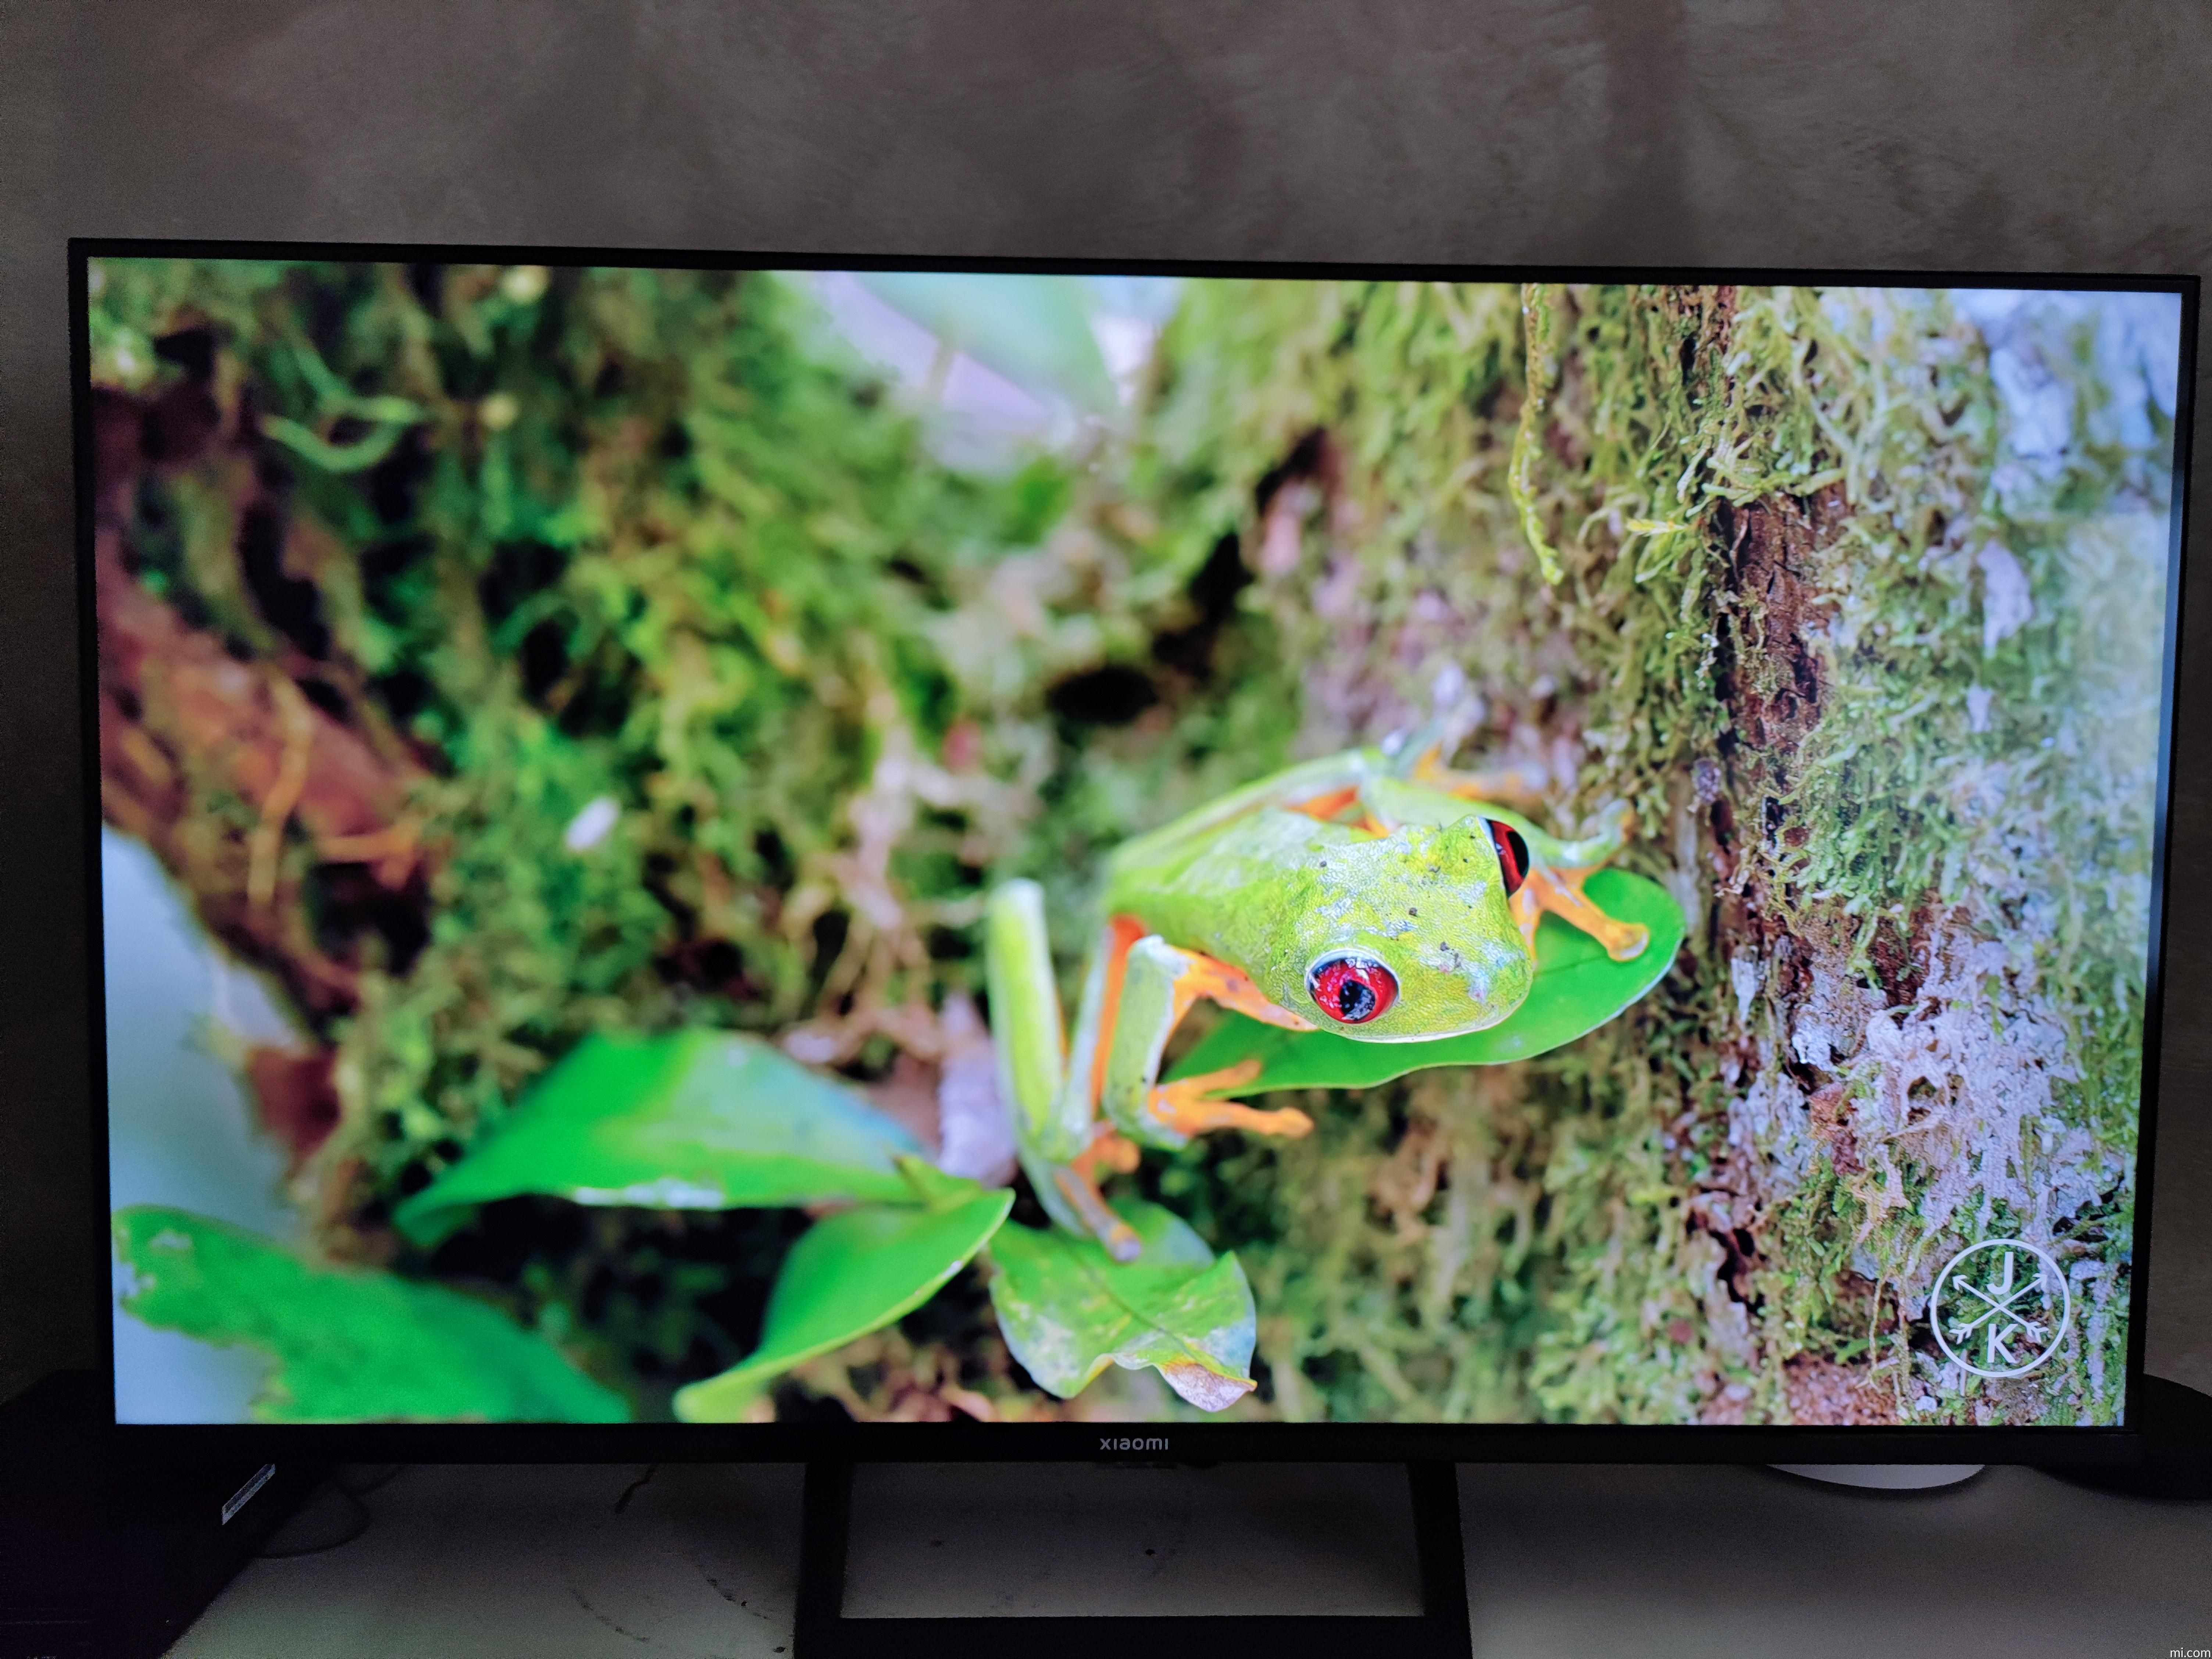 Xiaomi TV A2 43″ • Xiaomi